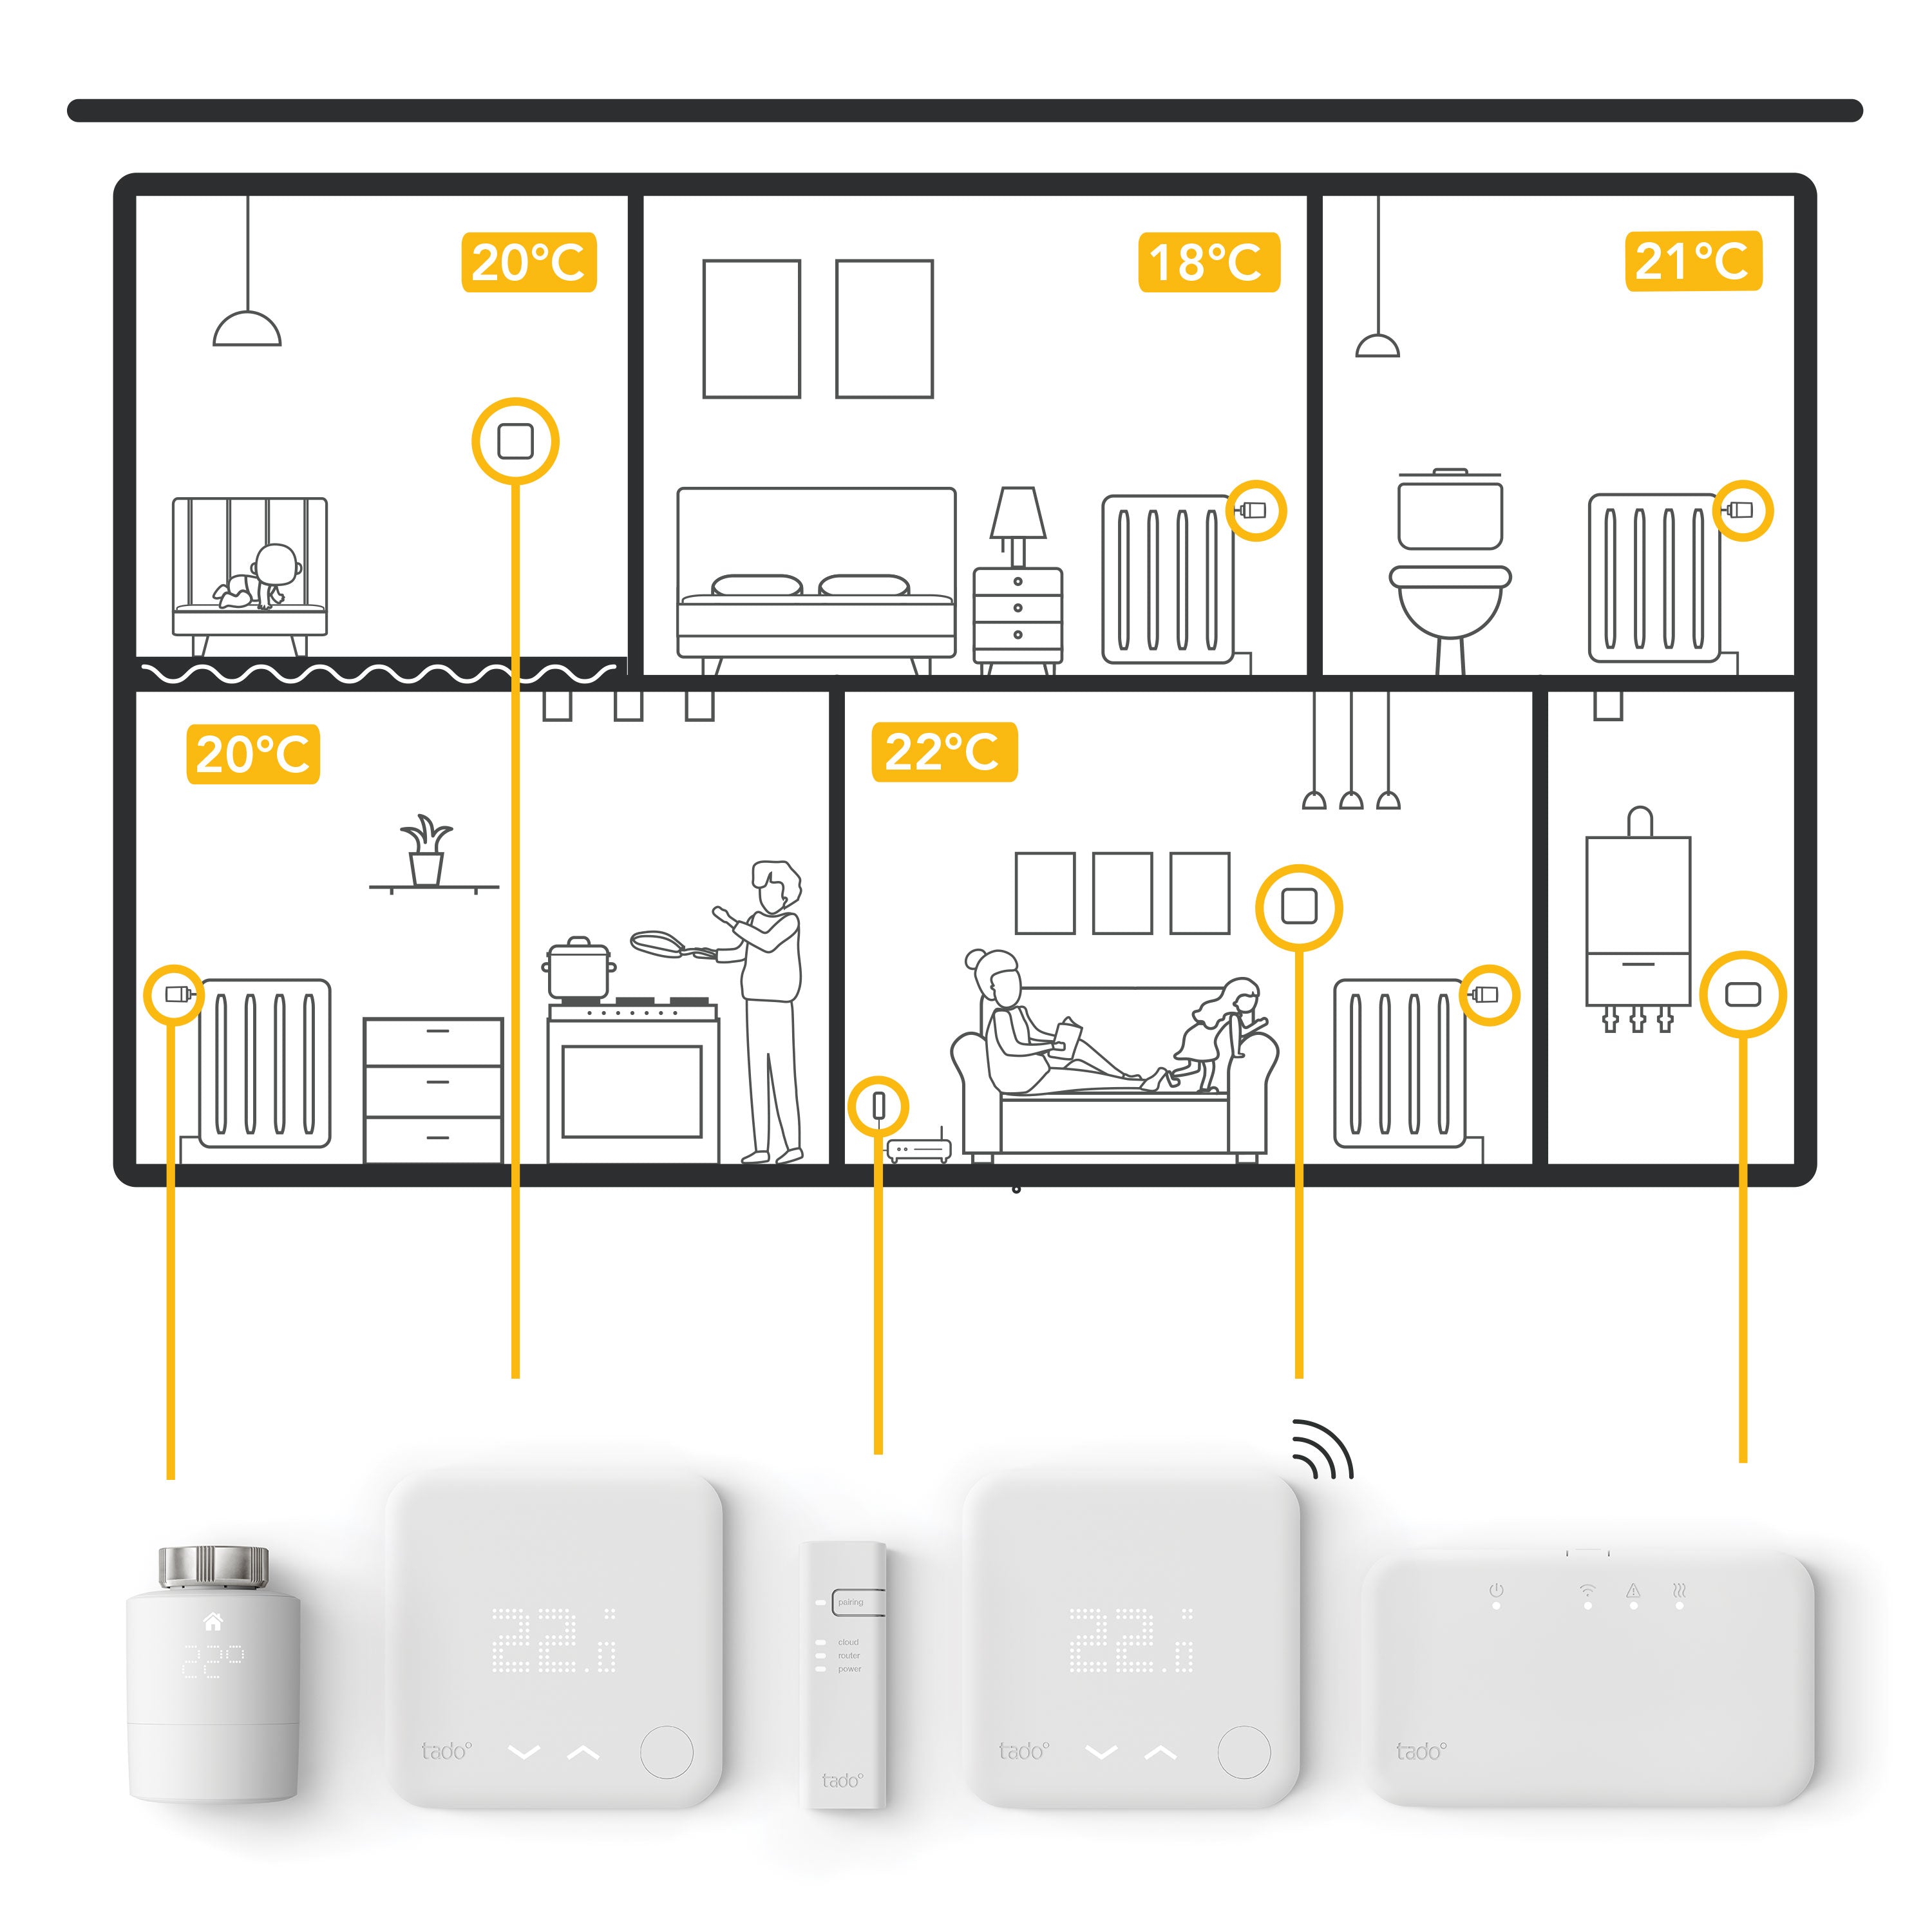 Kit de démarrage - Thermostat intelligent câblé V3+